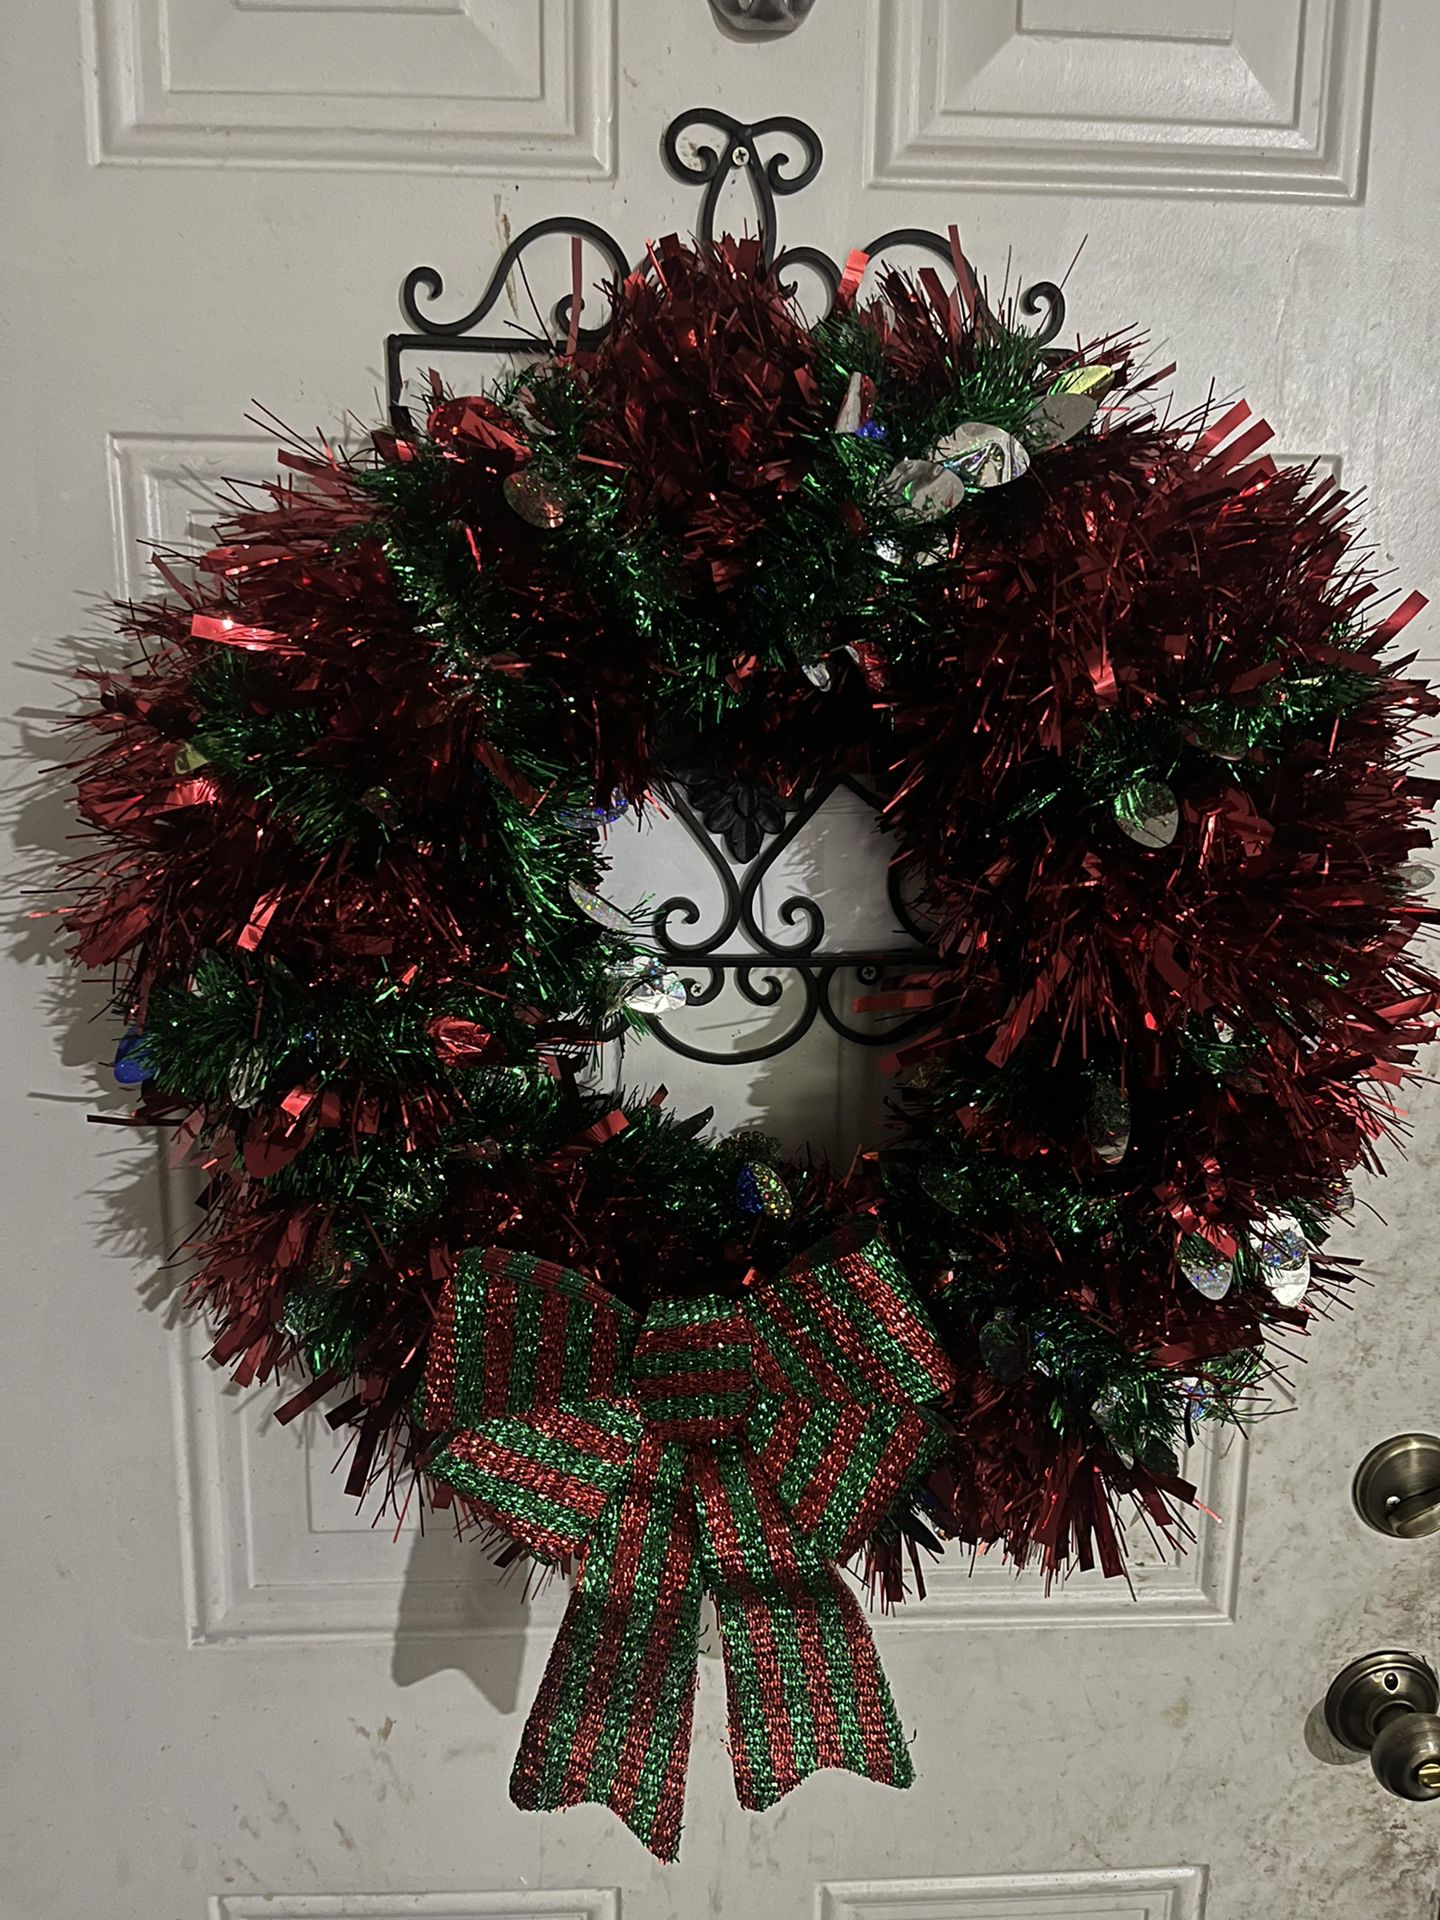 Homemade Christmas Wreaths